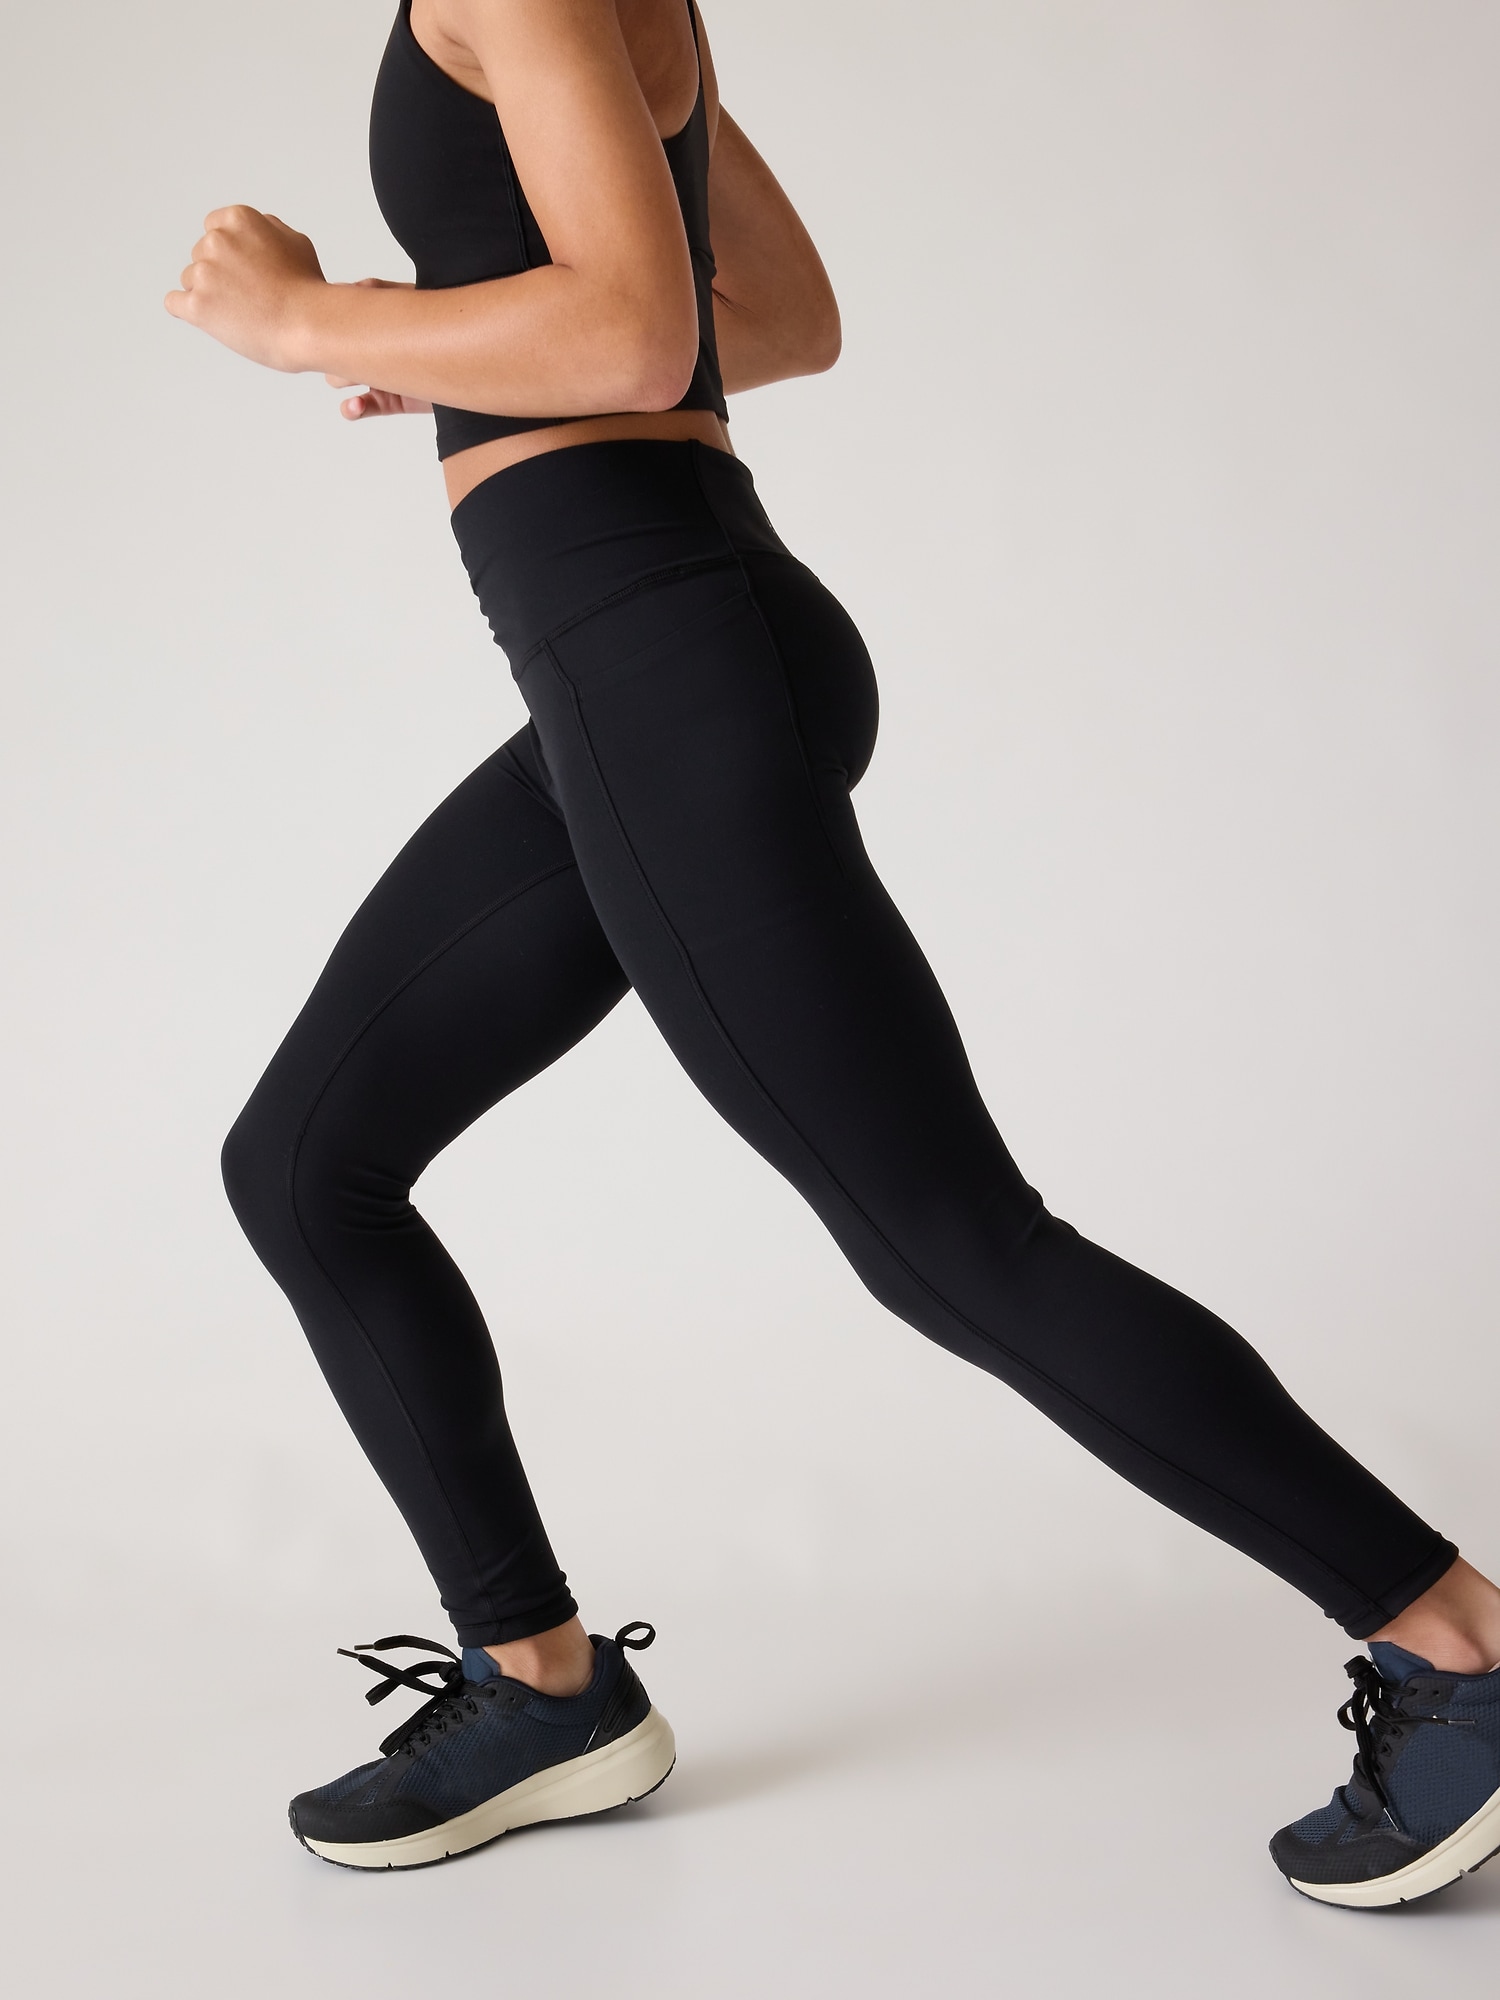 Athleta XS Transcend Slim Pant Black SOFT Barely-There Yoga